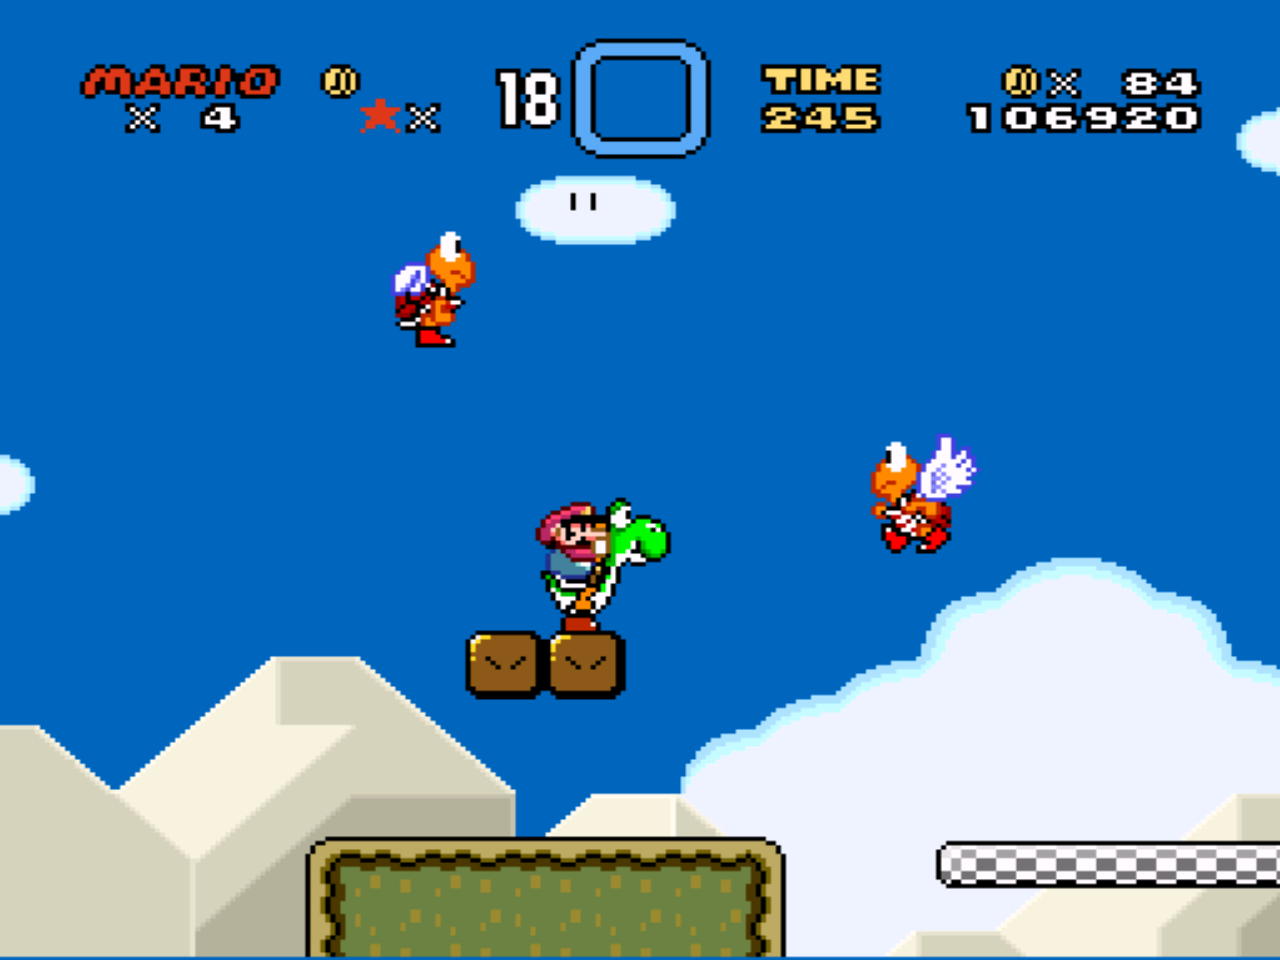 Super-Mario-World-banner-image.png